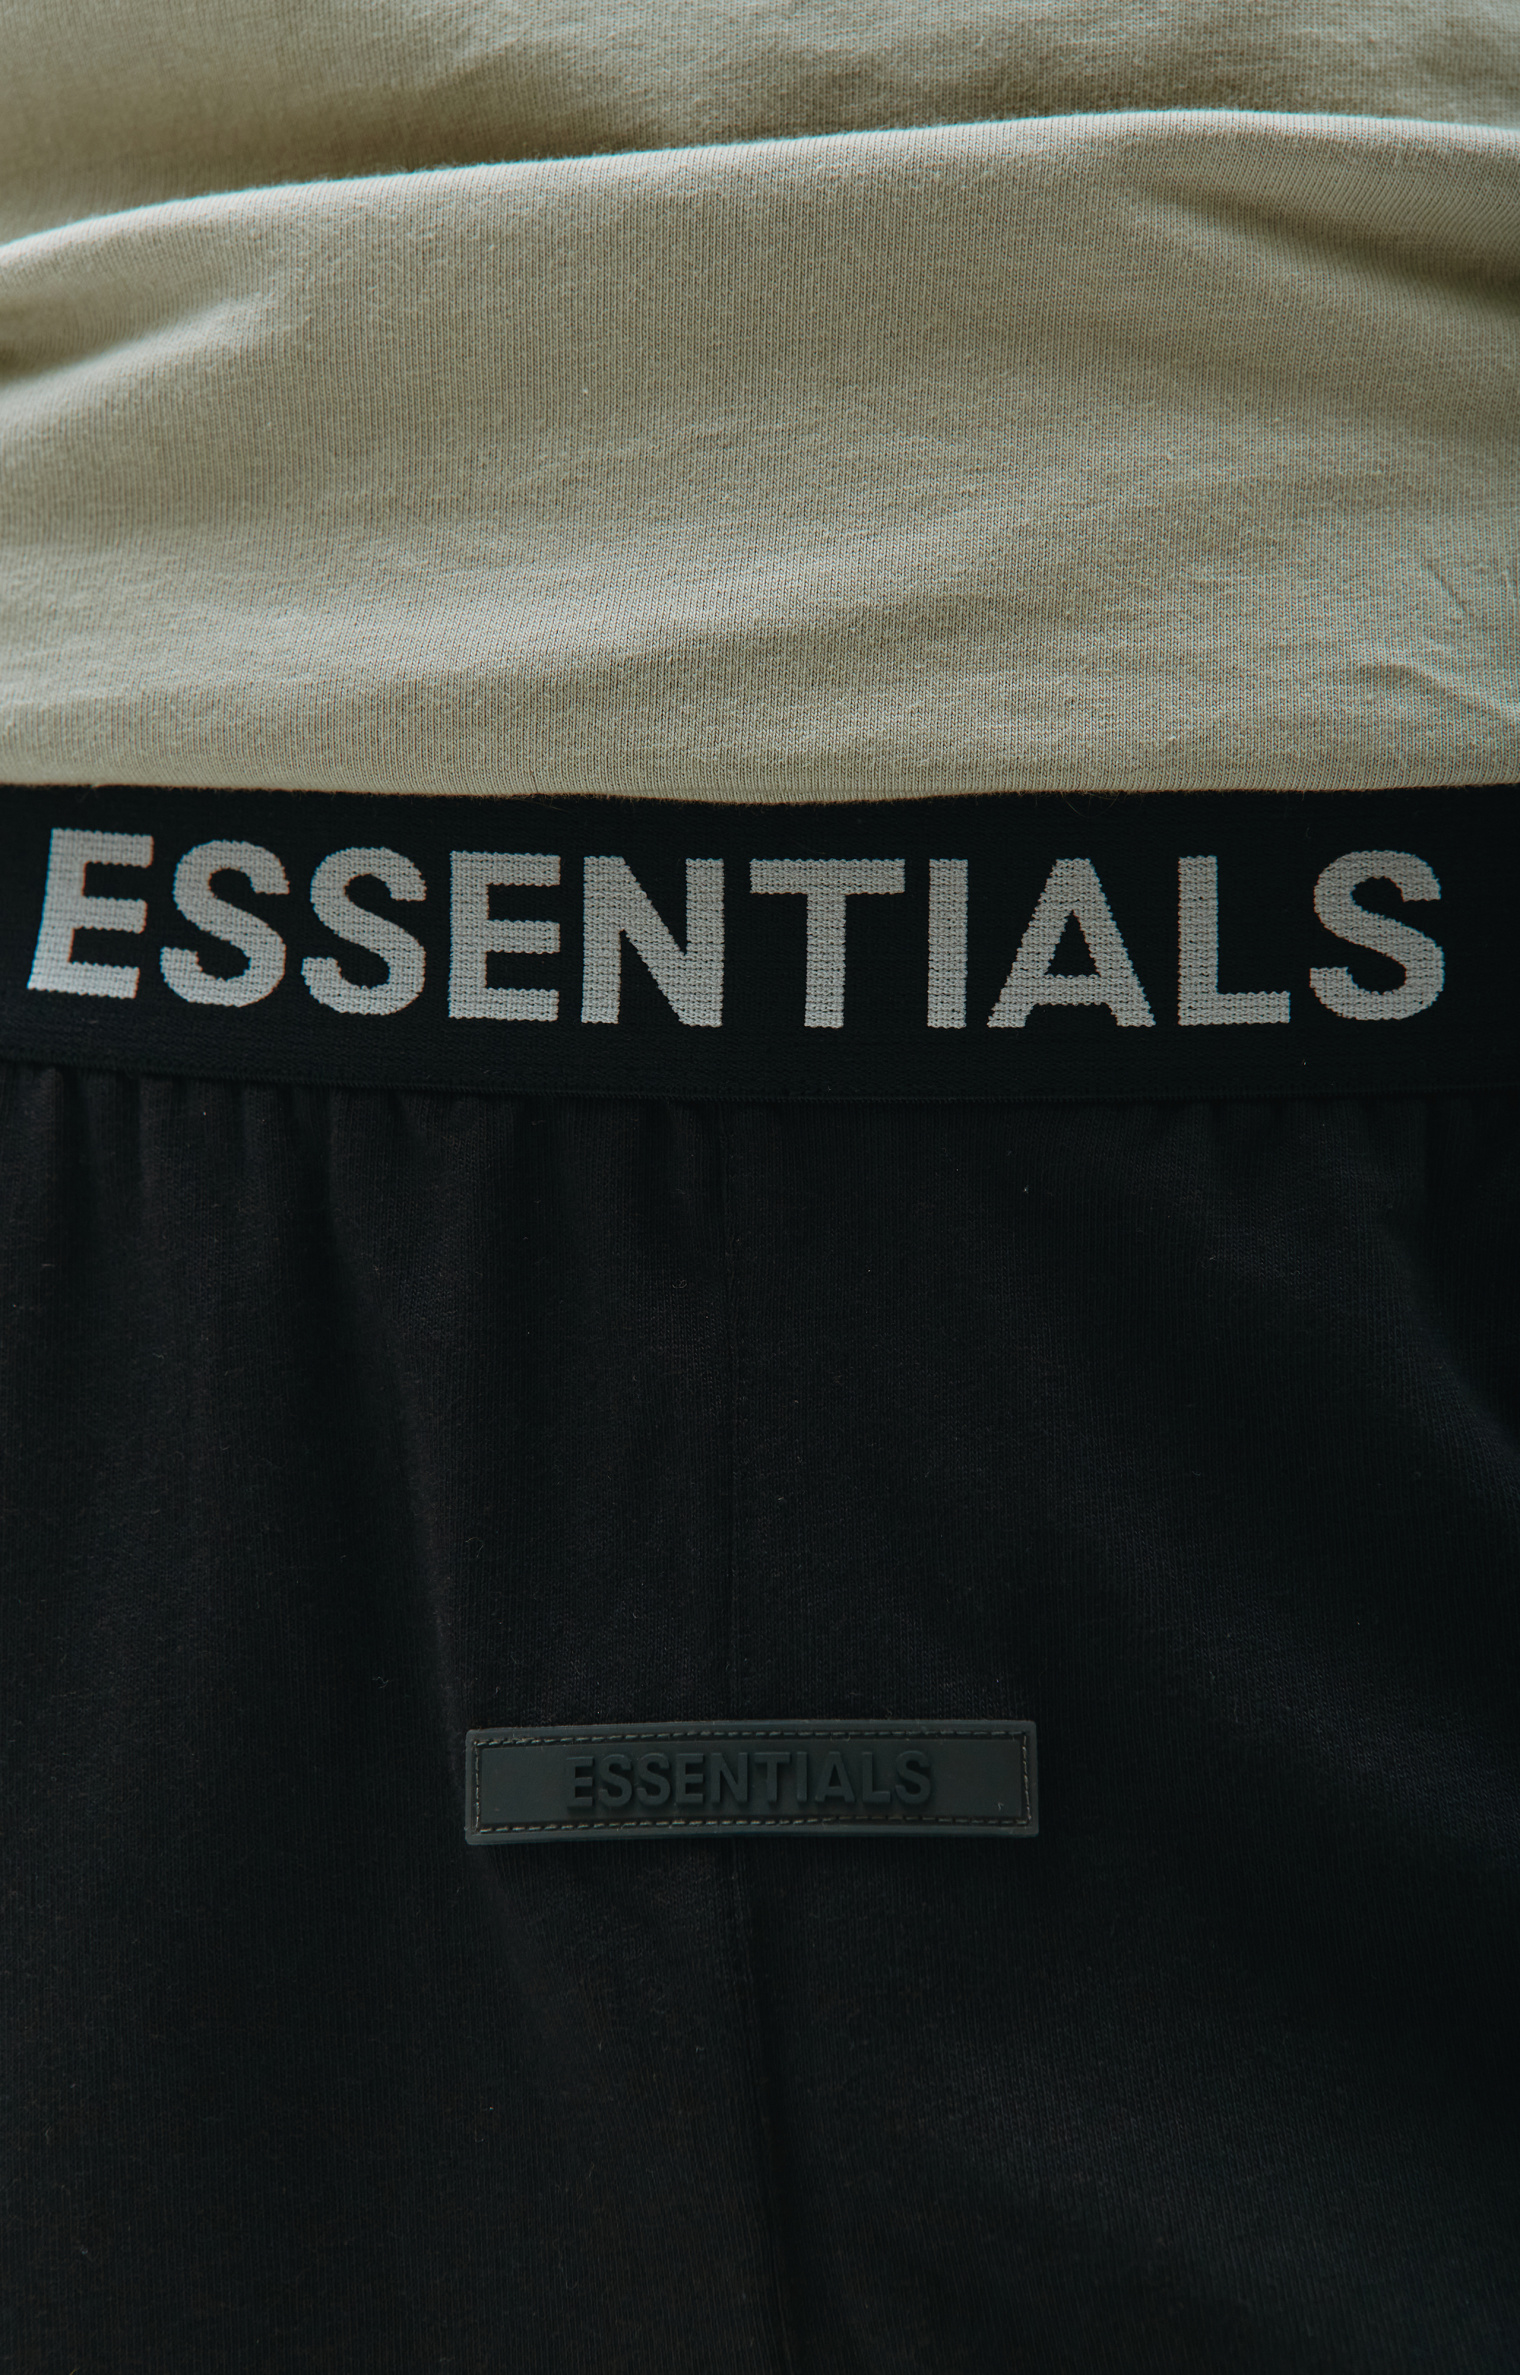 Fear of God Essentials Black logo shorts with elastic